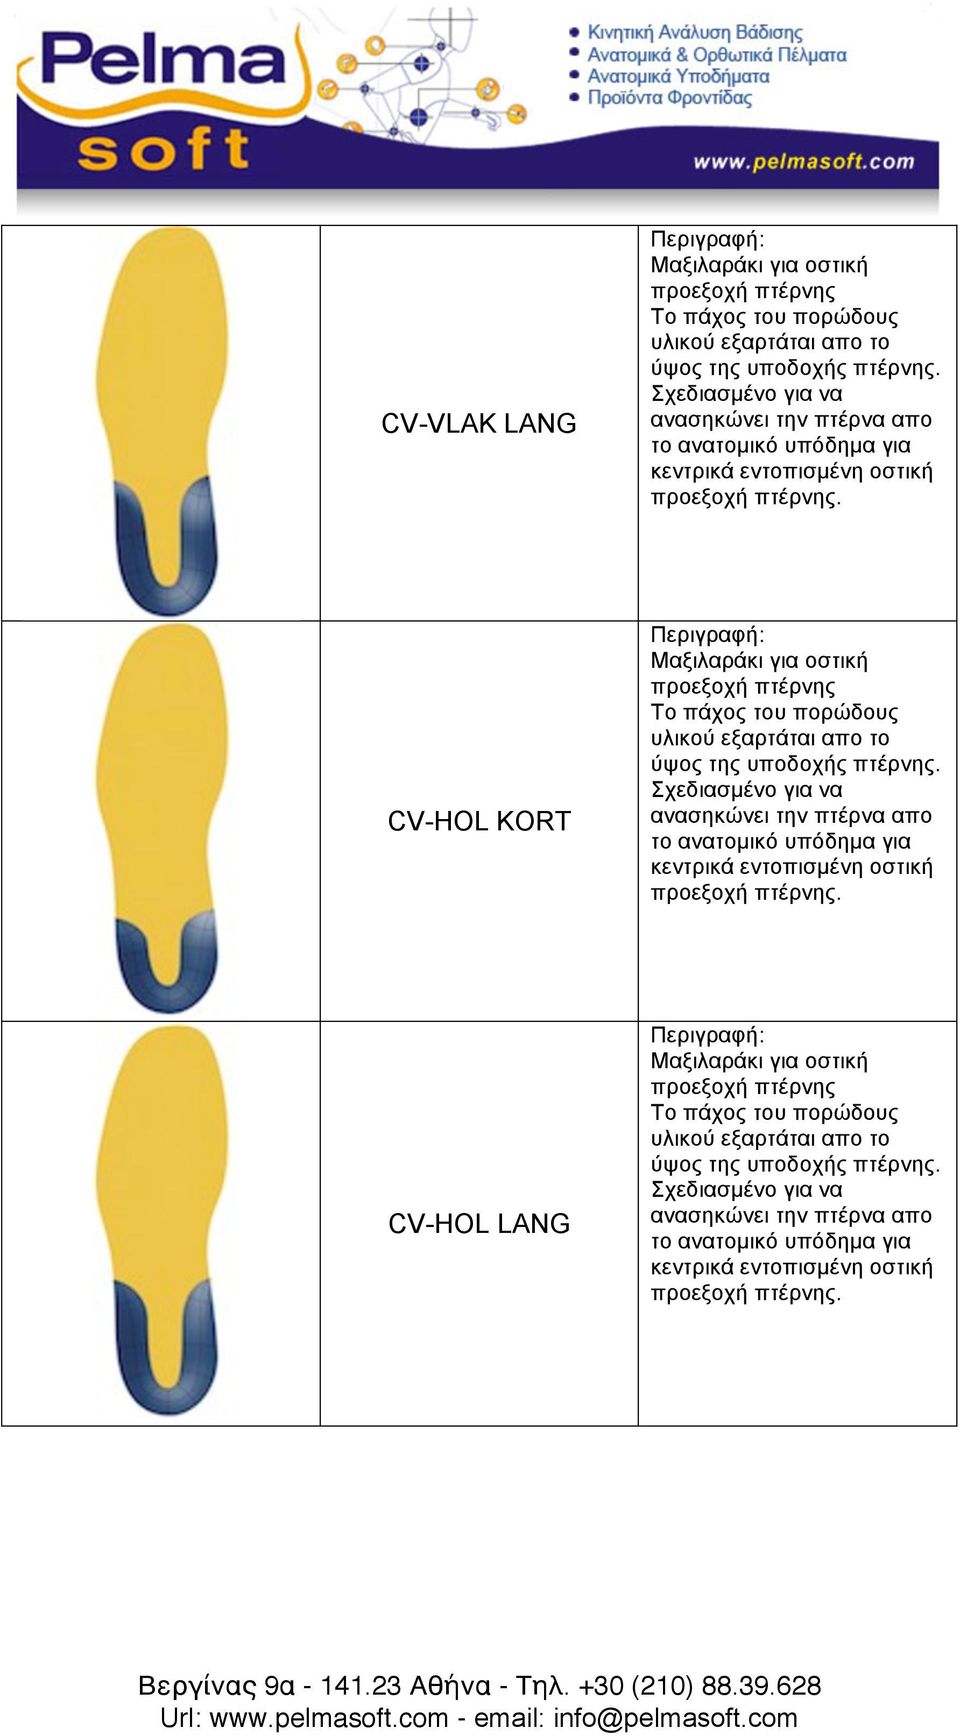 CV-HOL KORT Μαξιλαράκι για οστική προεξοχή πτέρνης Το πάχος του πορώδους υλικού εξαρτάται απο το ύψος της υποδοχής πτέρνης.